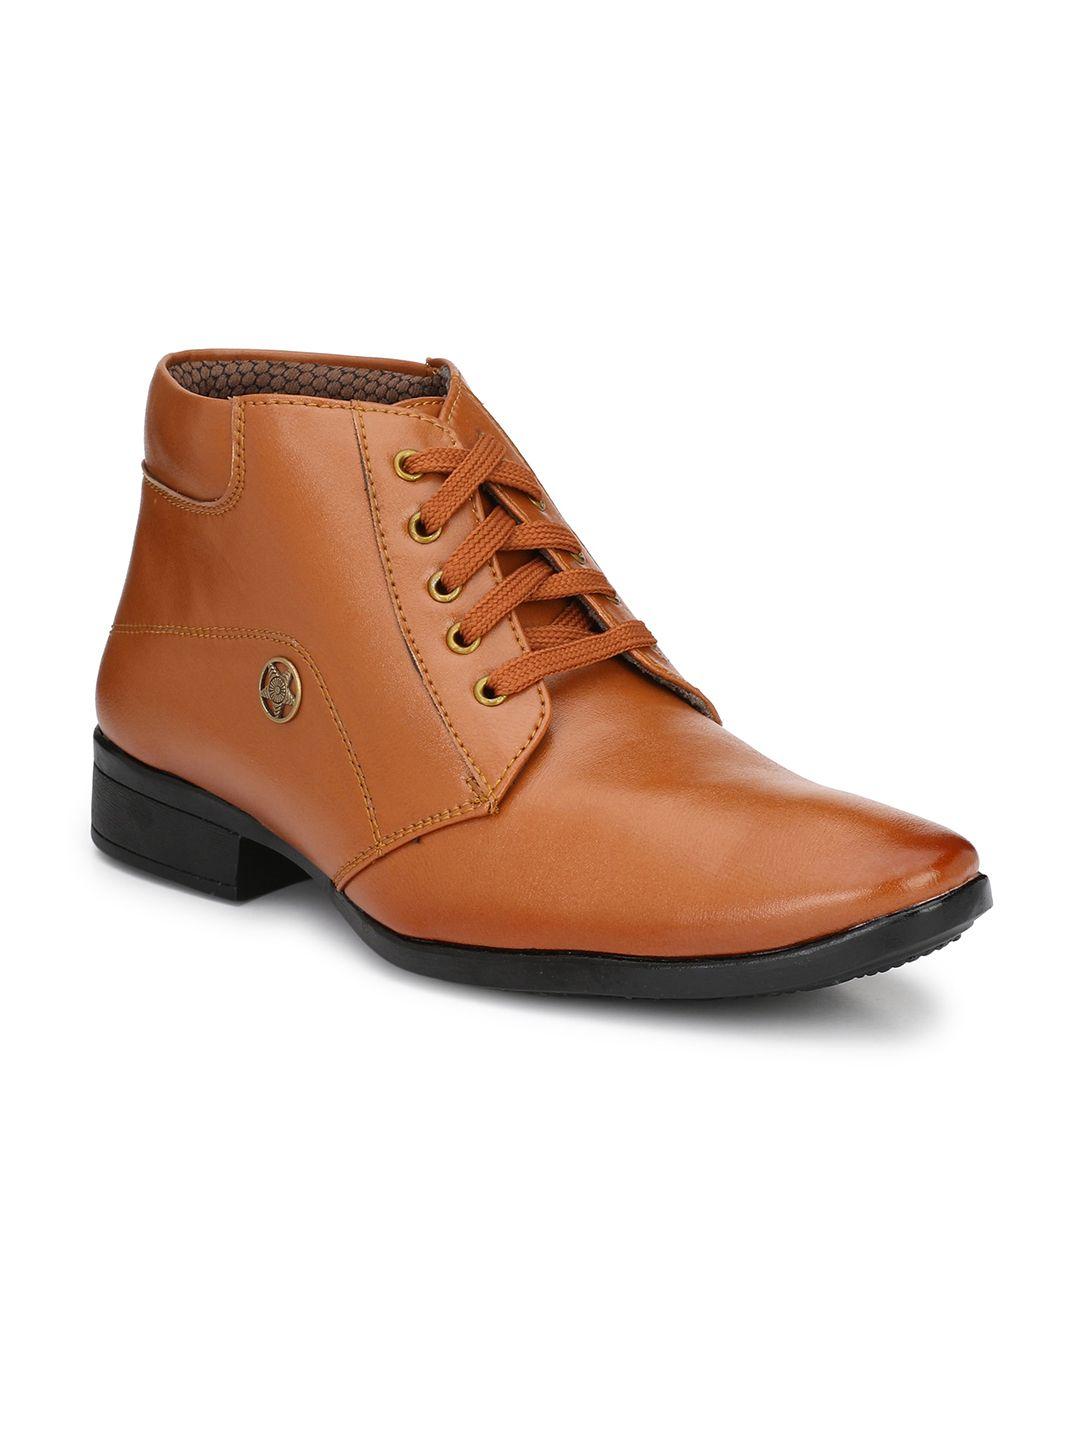 hundo p men tan-brown solid casual regular boots